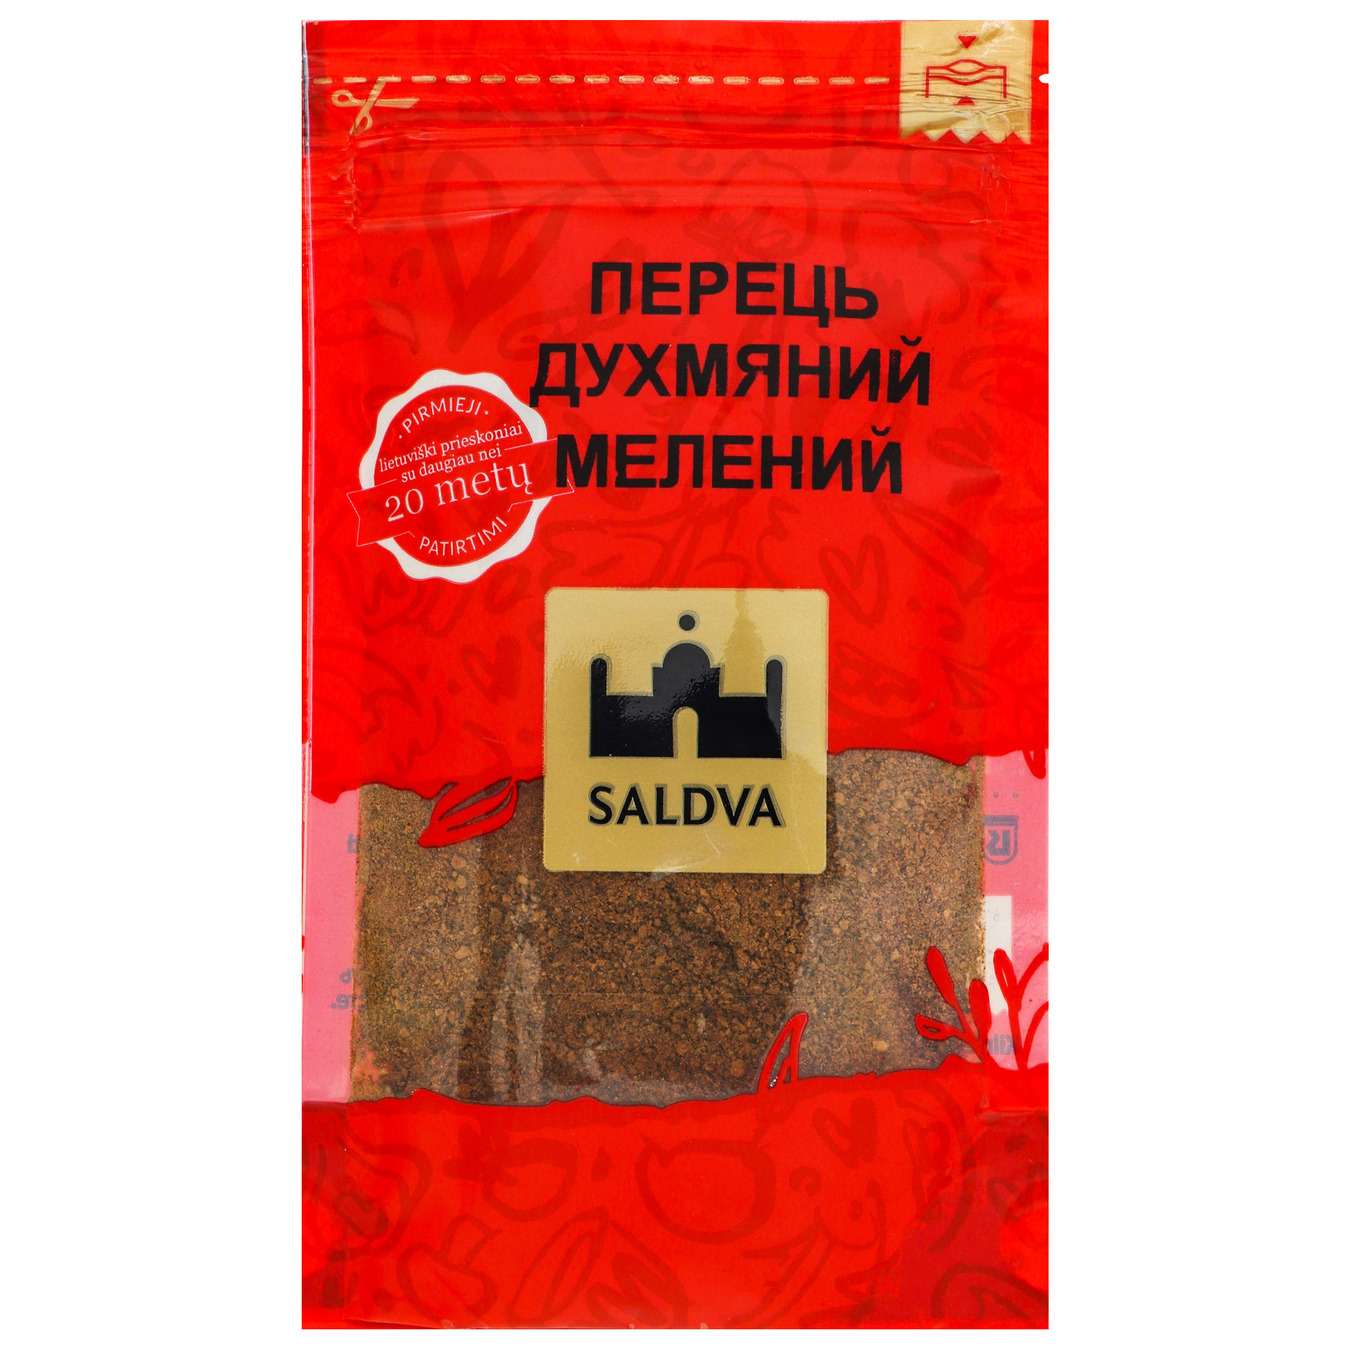 Pepper Saldva Sweet-scented ground 30g